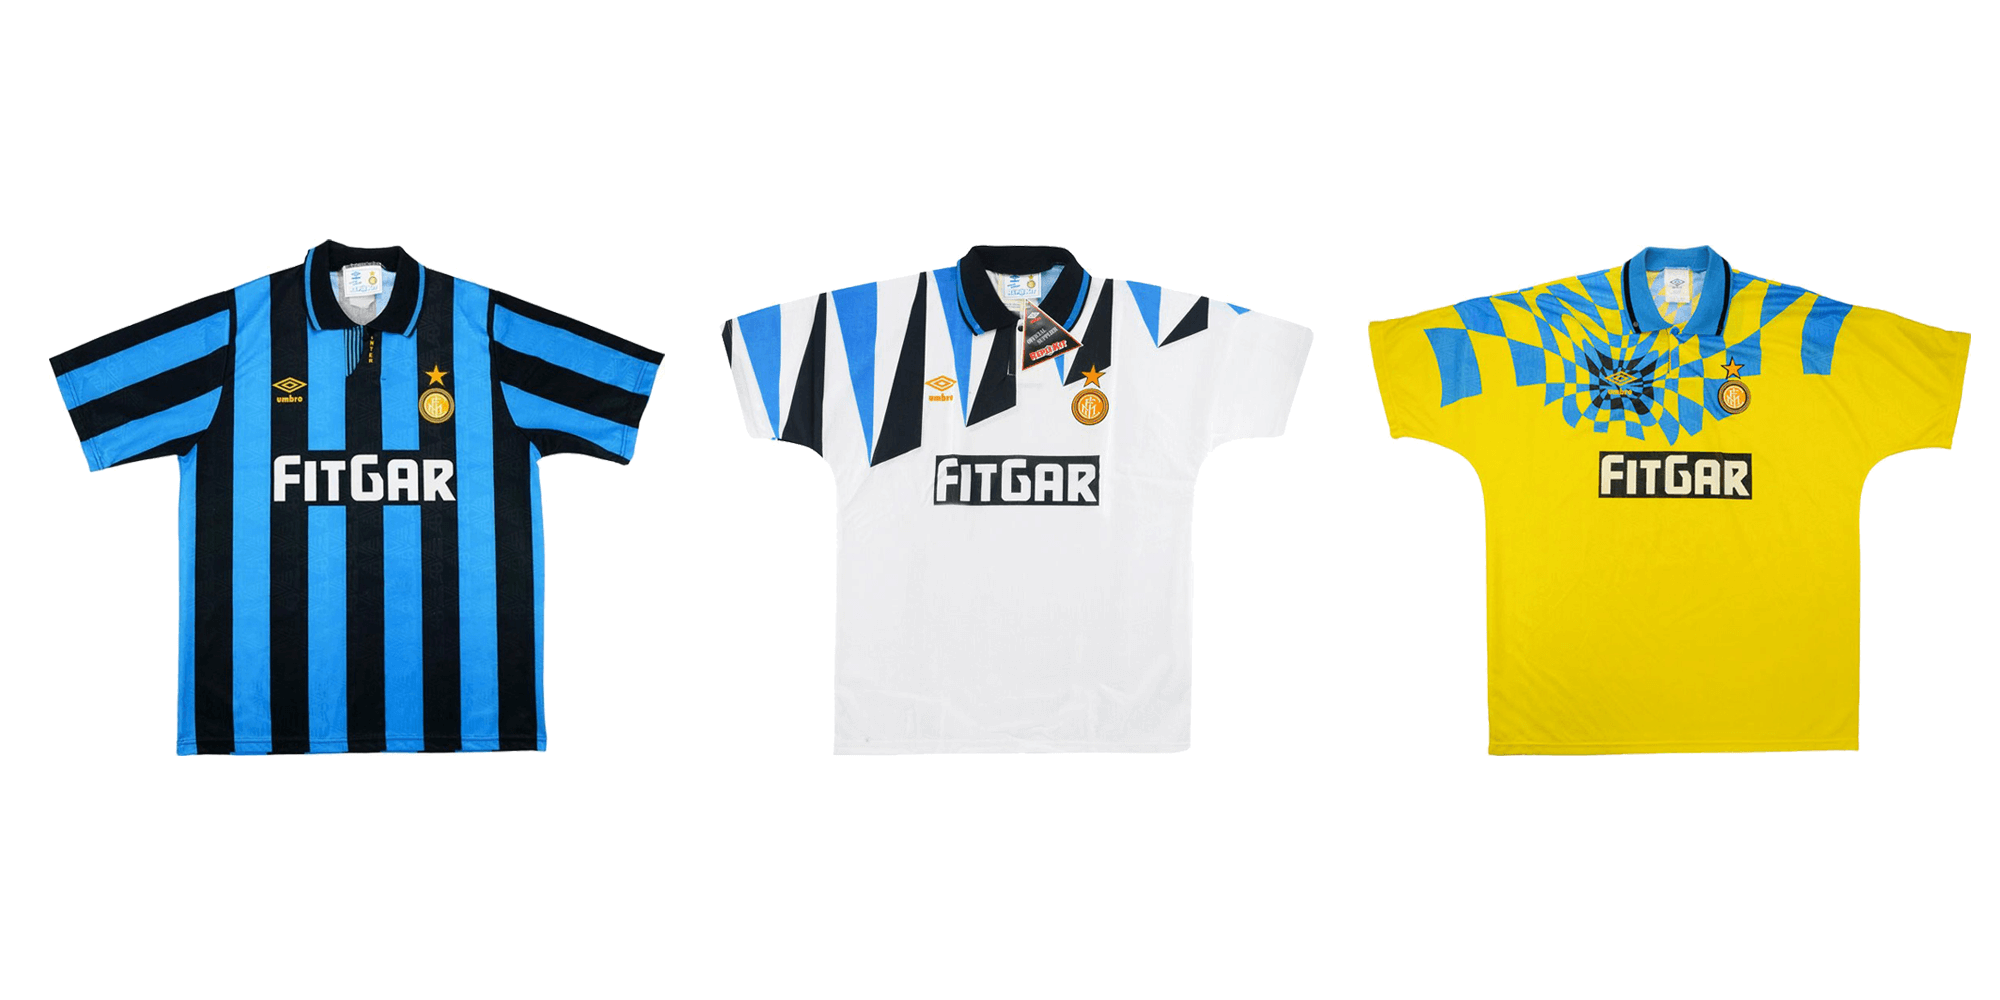 Inter Milan release incredible retro Nike third kit inspired by